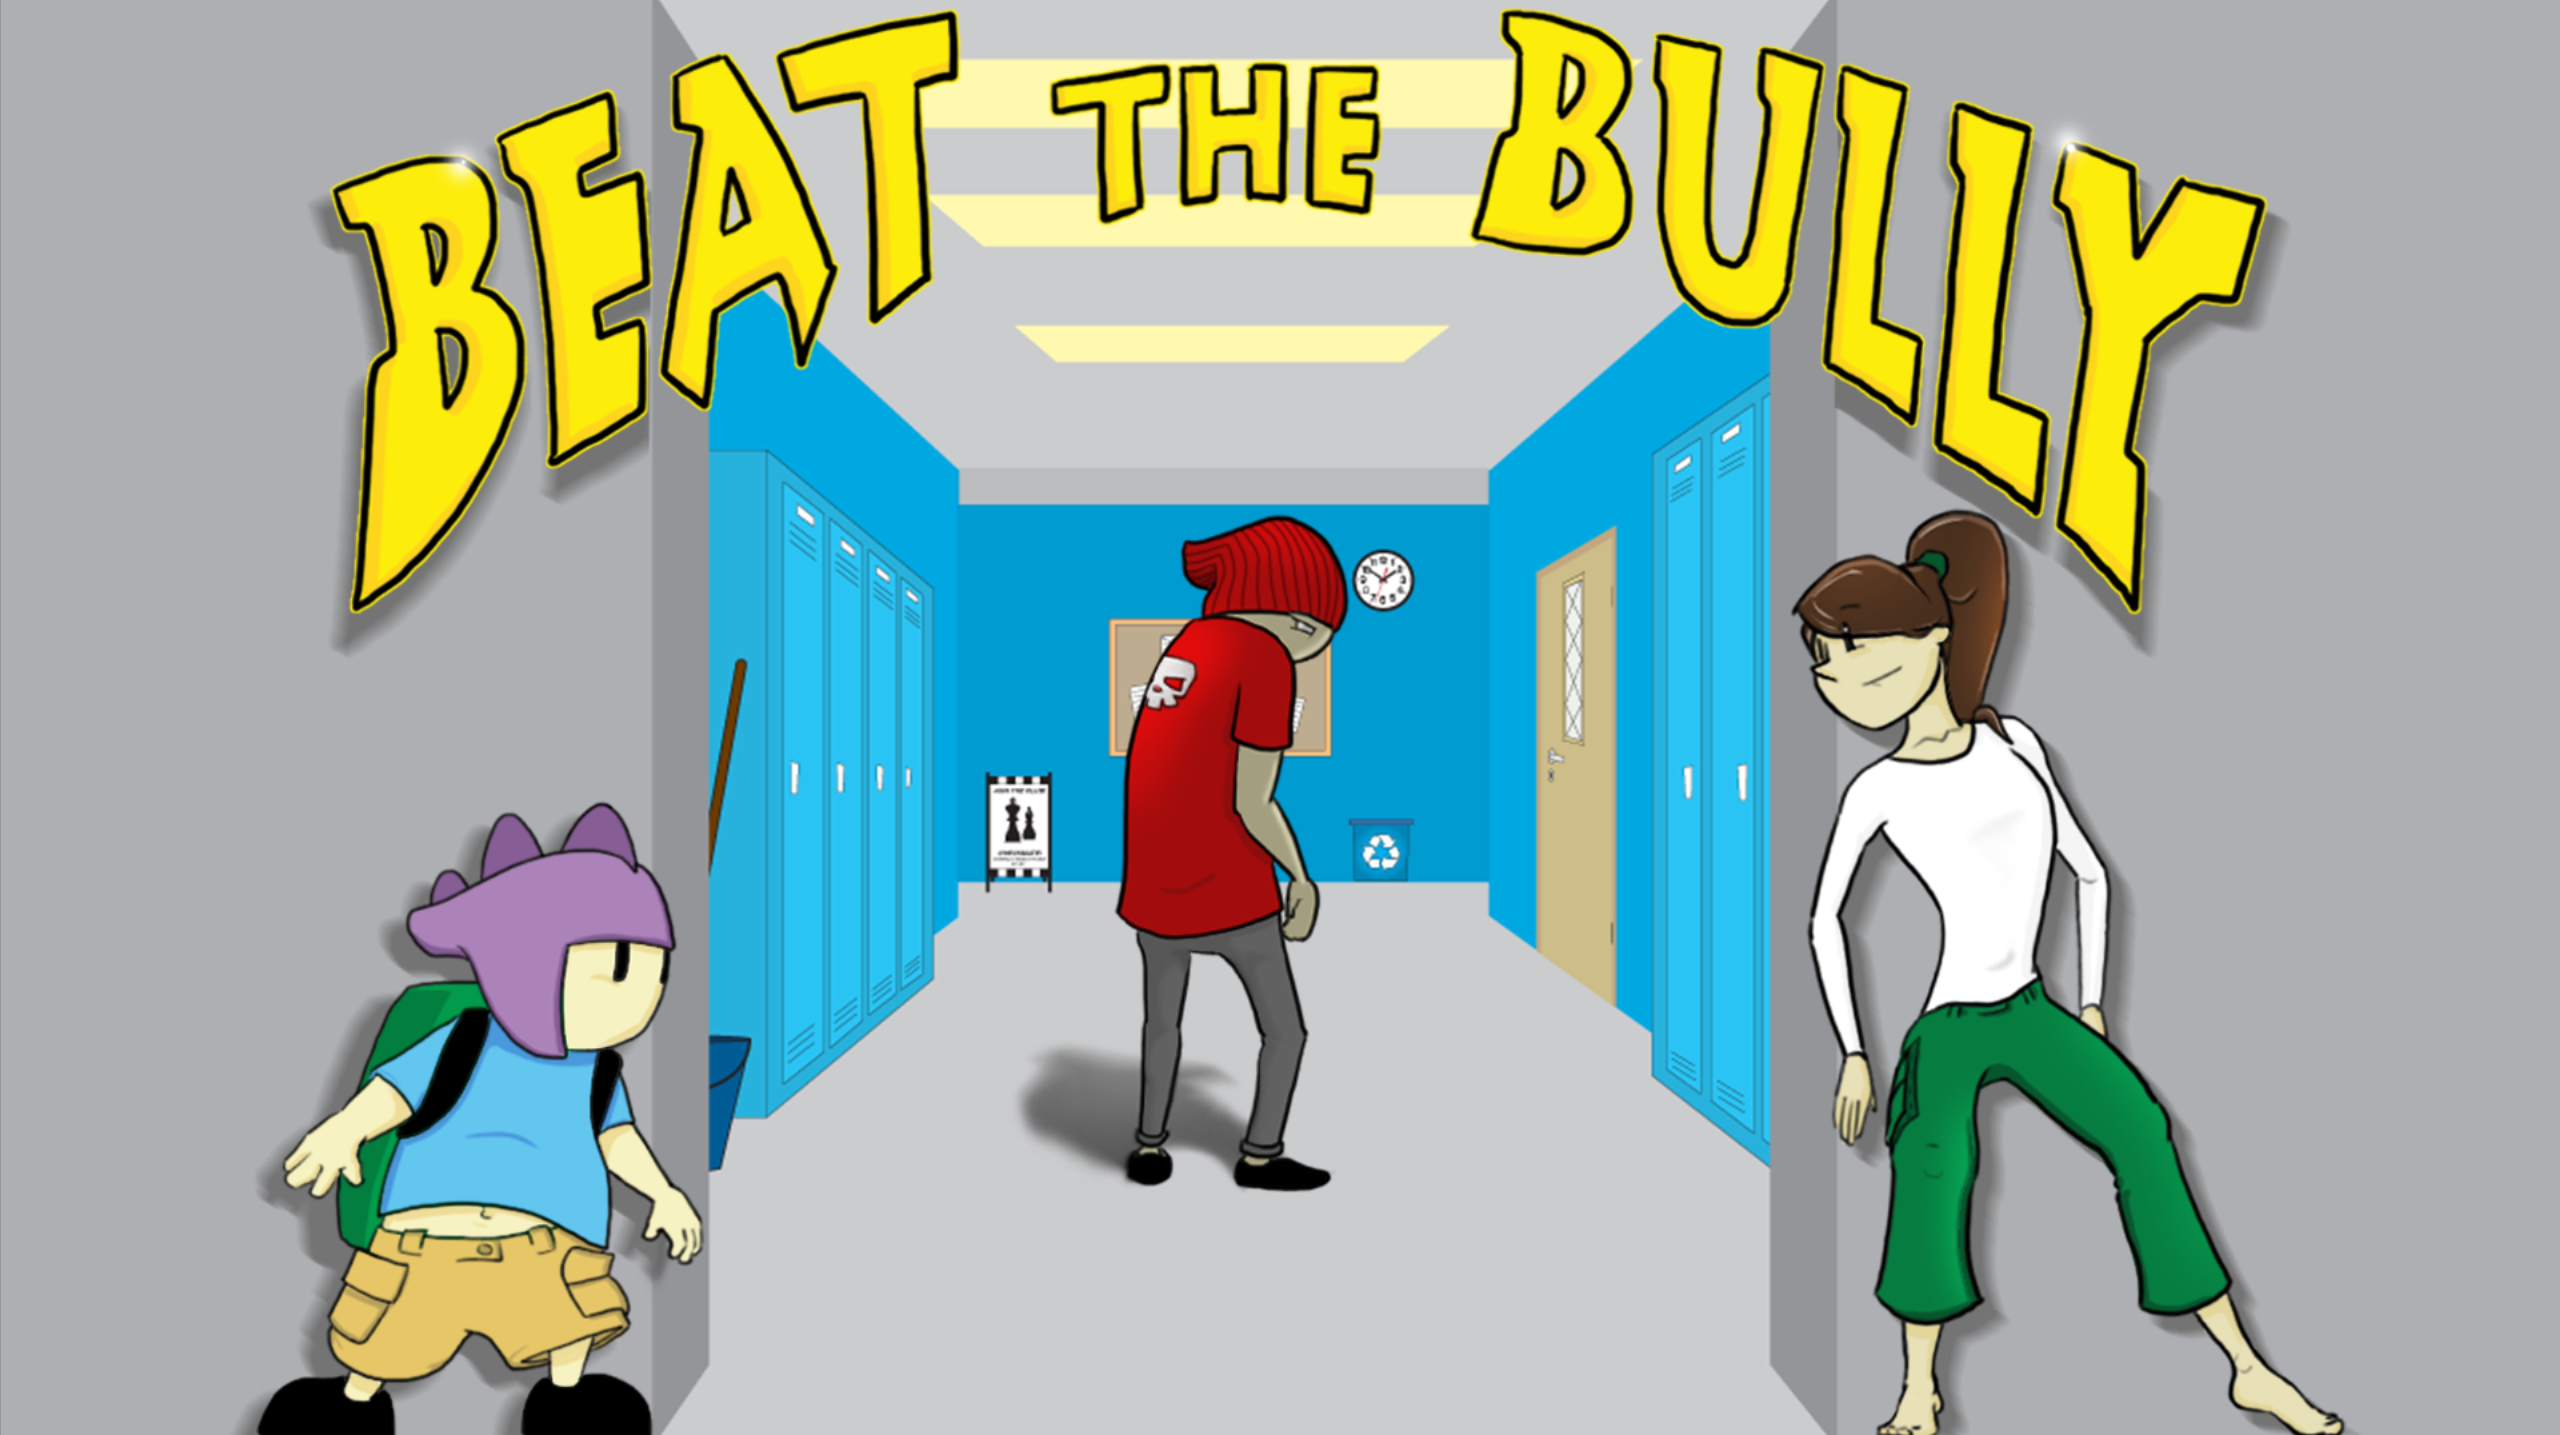 Beat the Bully